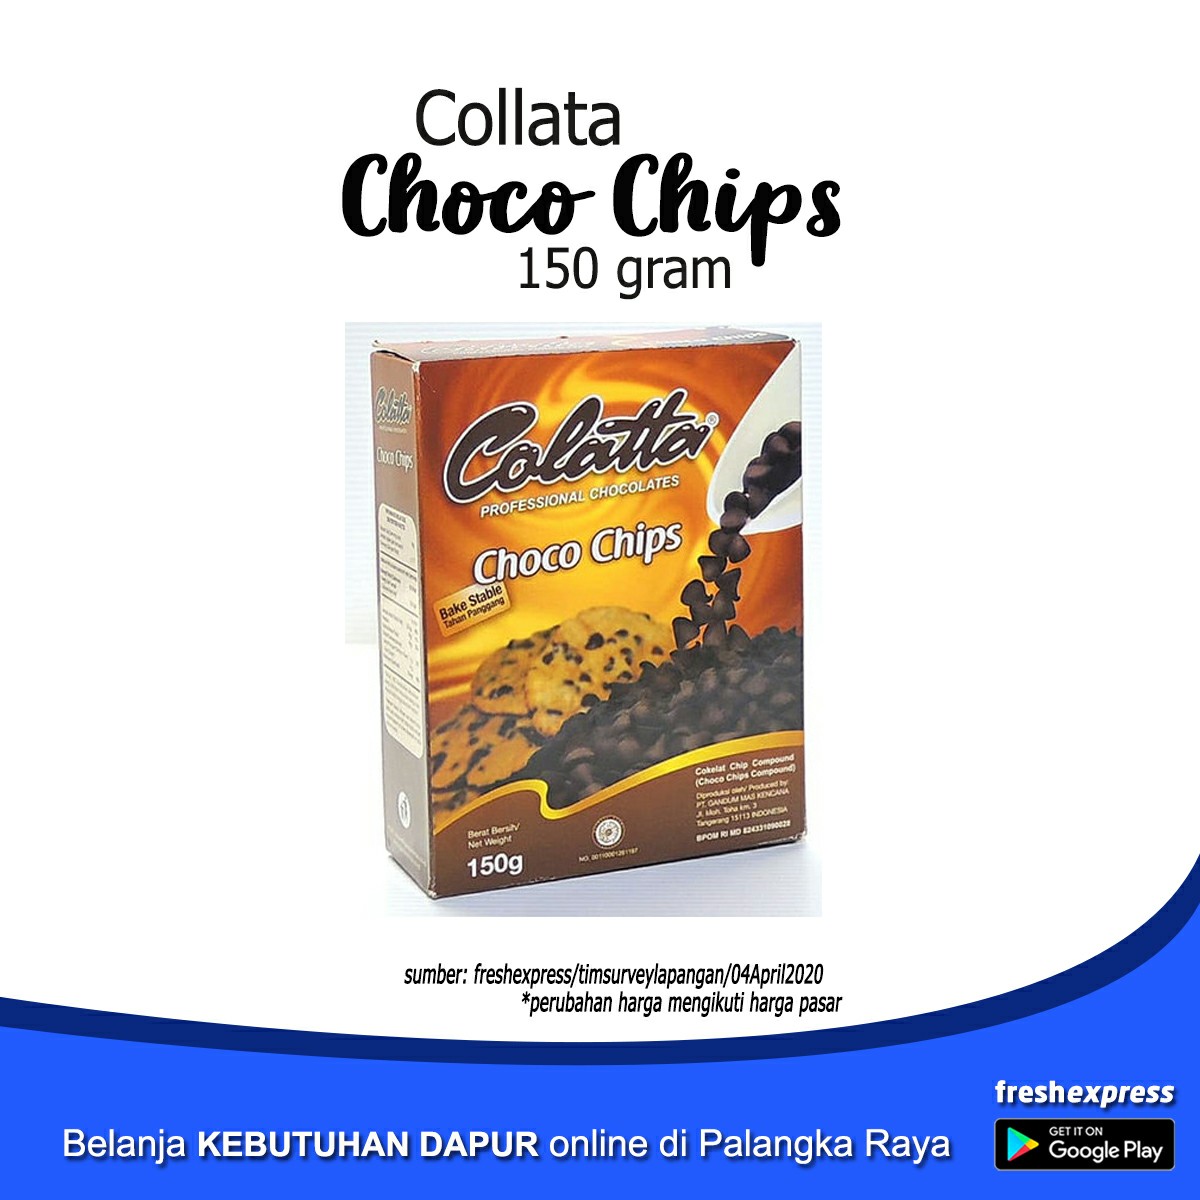 Collata Choco Chips 150 Gram